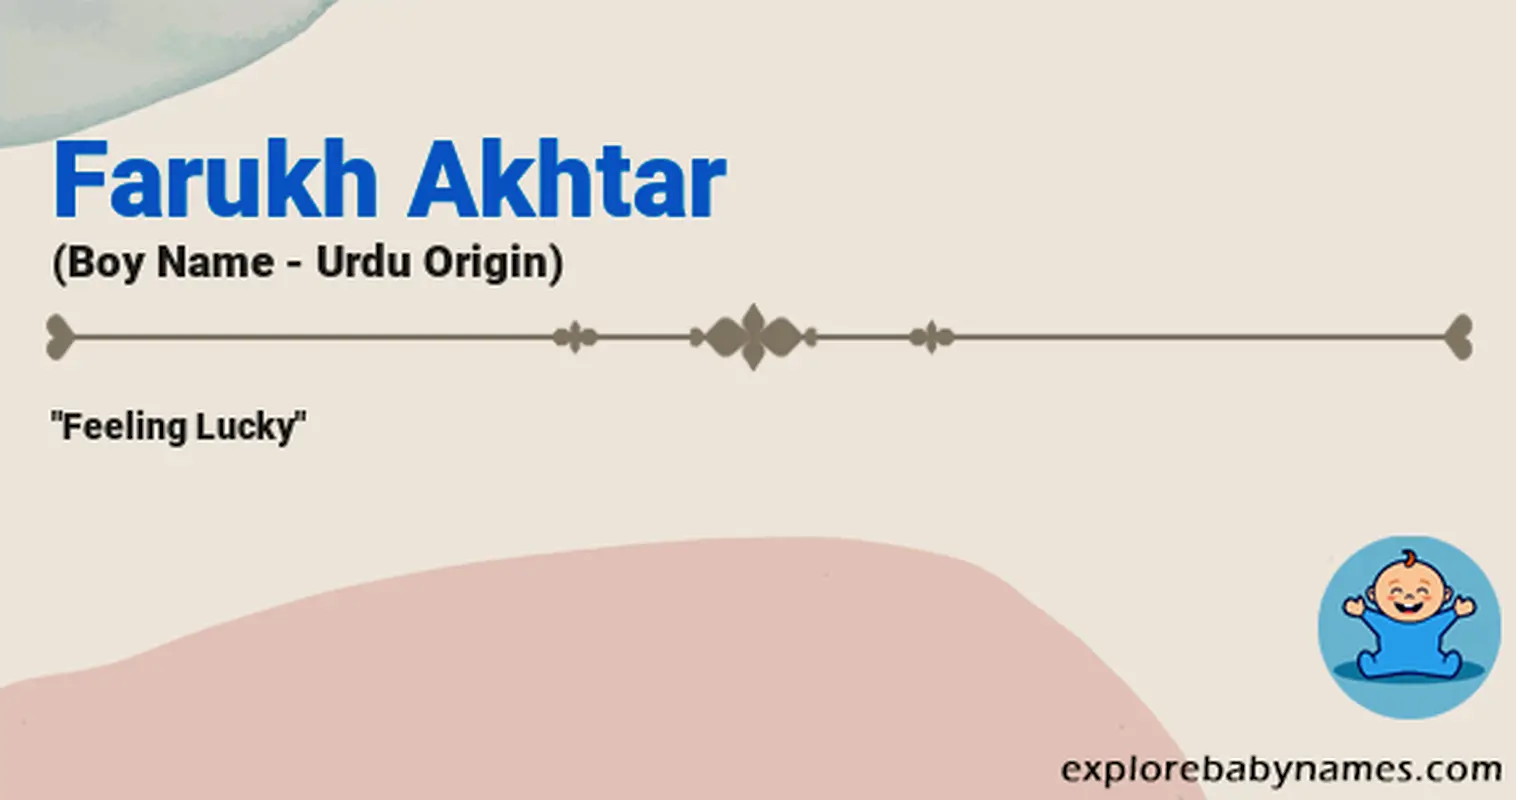 Meaning of Farukh Akhtar